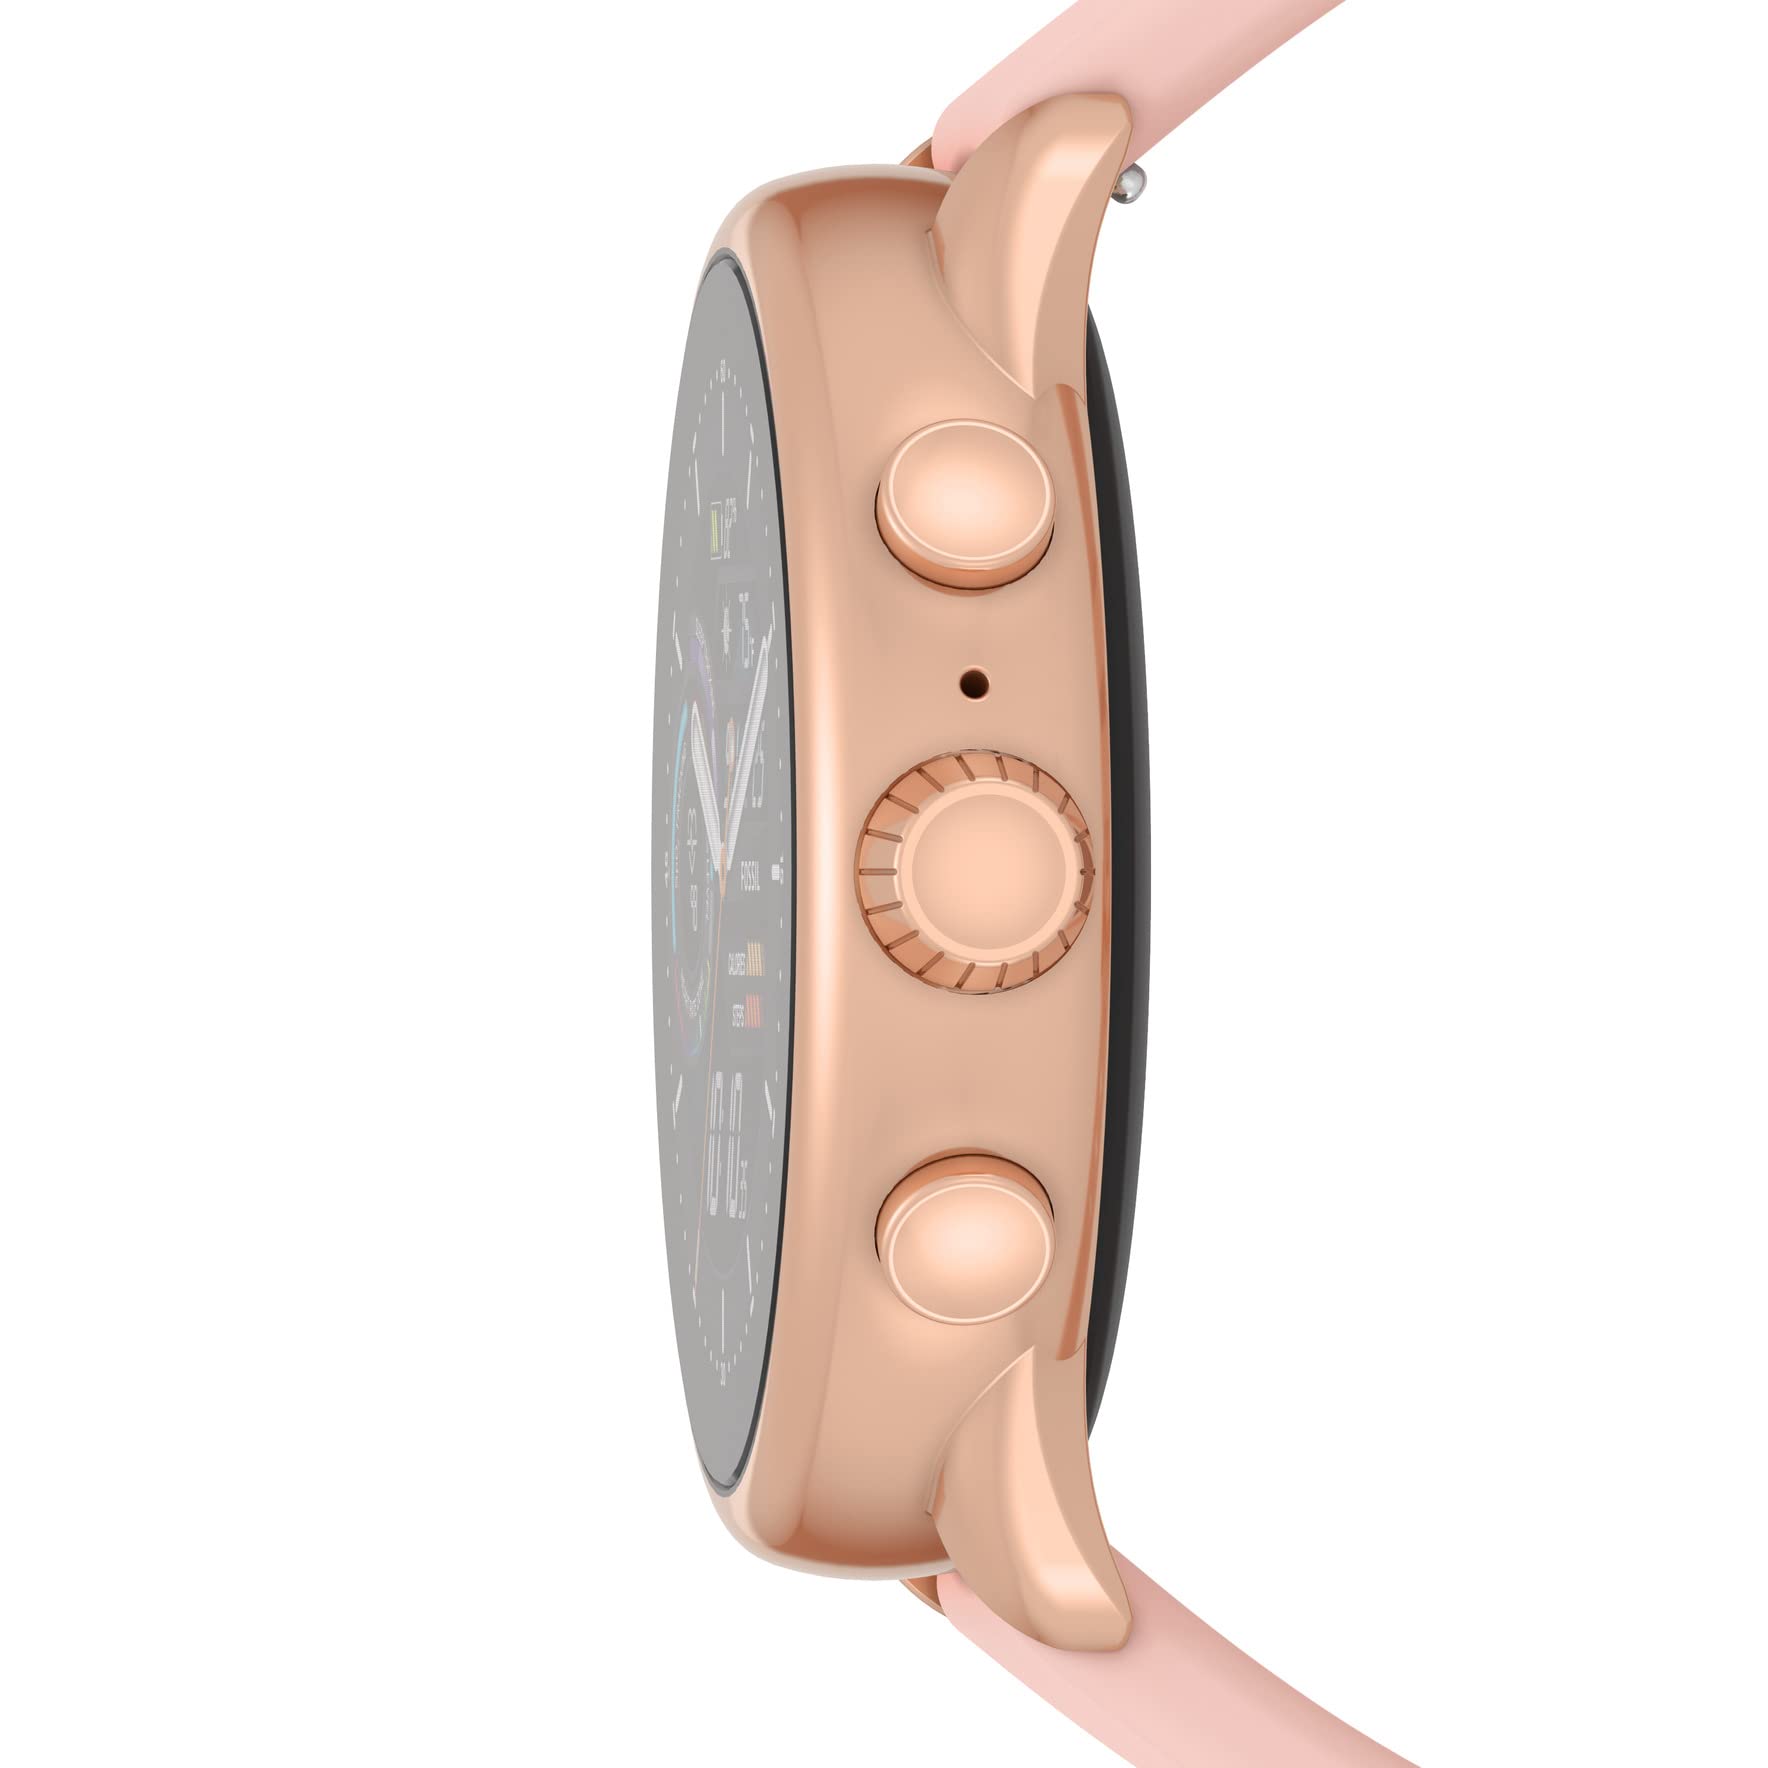 Fossil Gen 6 Wellness Edition 44mm Touchscreen Smart Watch with Alexa Built-In, Fitness Tracker, Sleep Tracker, Heart Rate Monitor, GPS, Speaker, Music Control, Smartphone Notifications